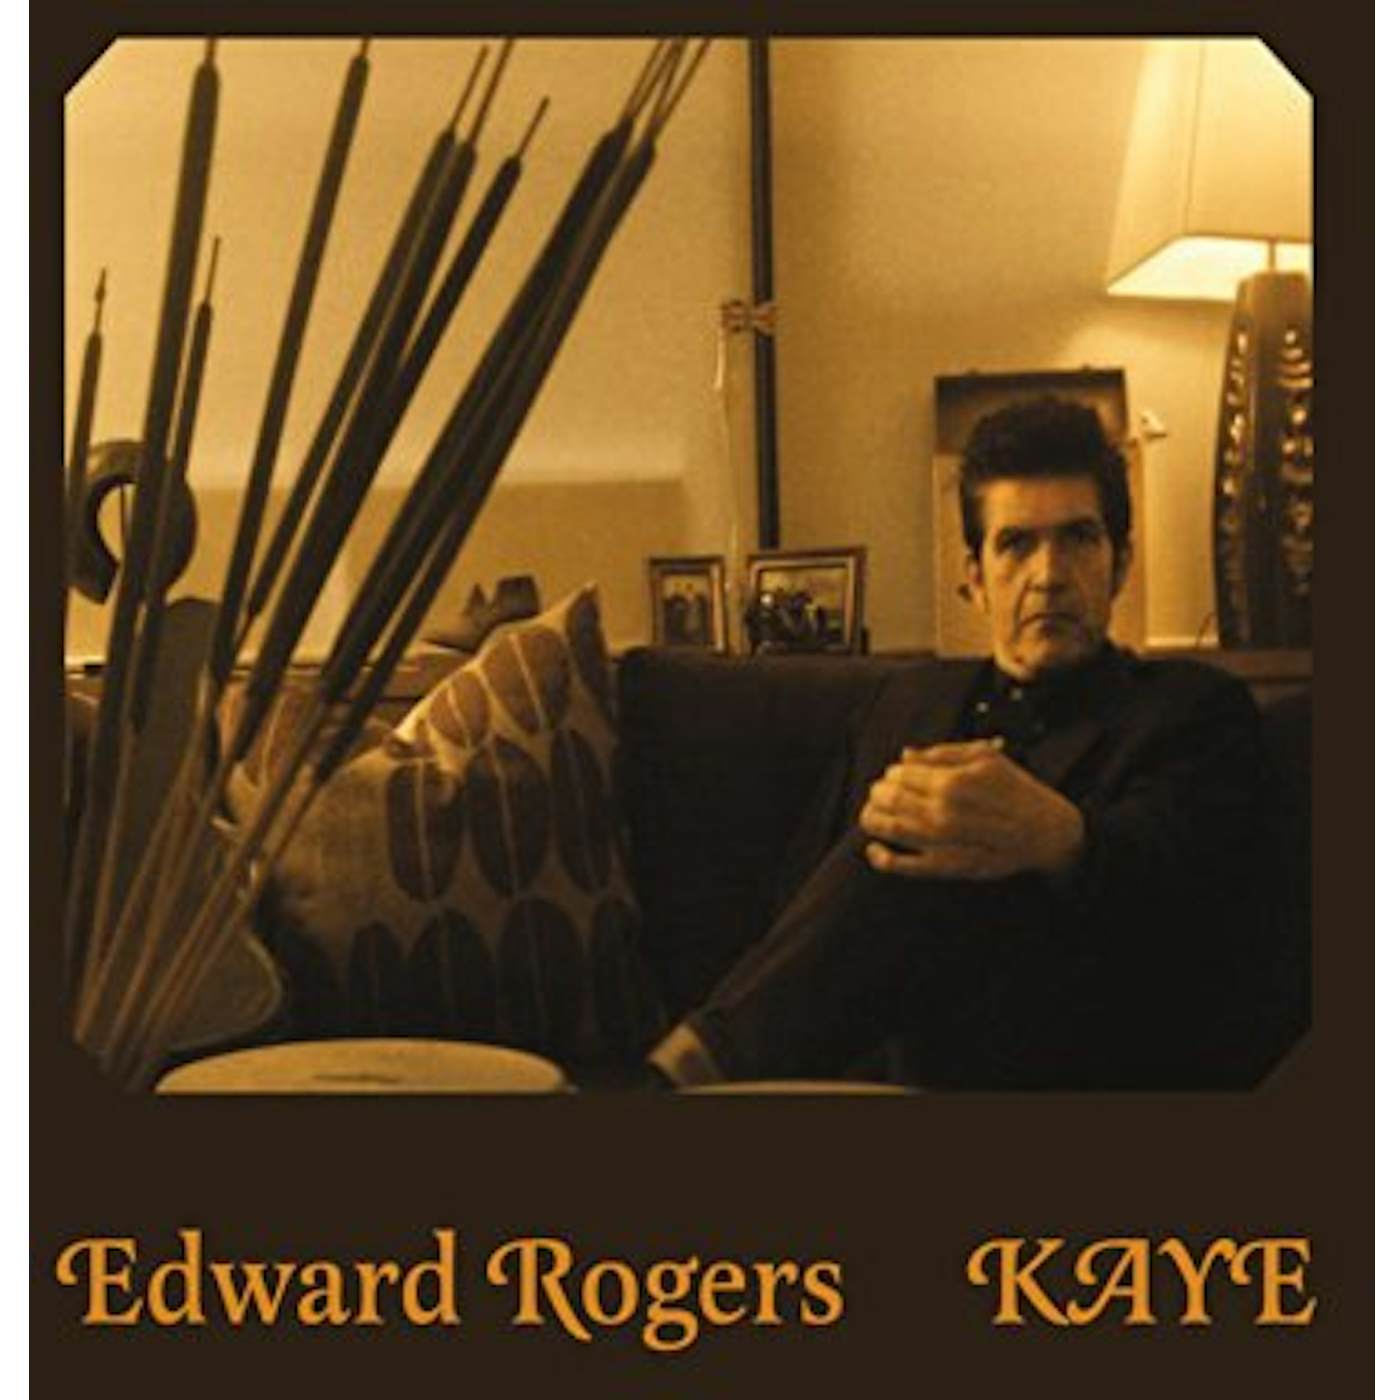 Edward Rogers KAYE CD